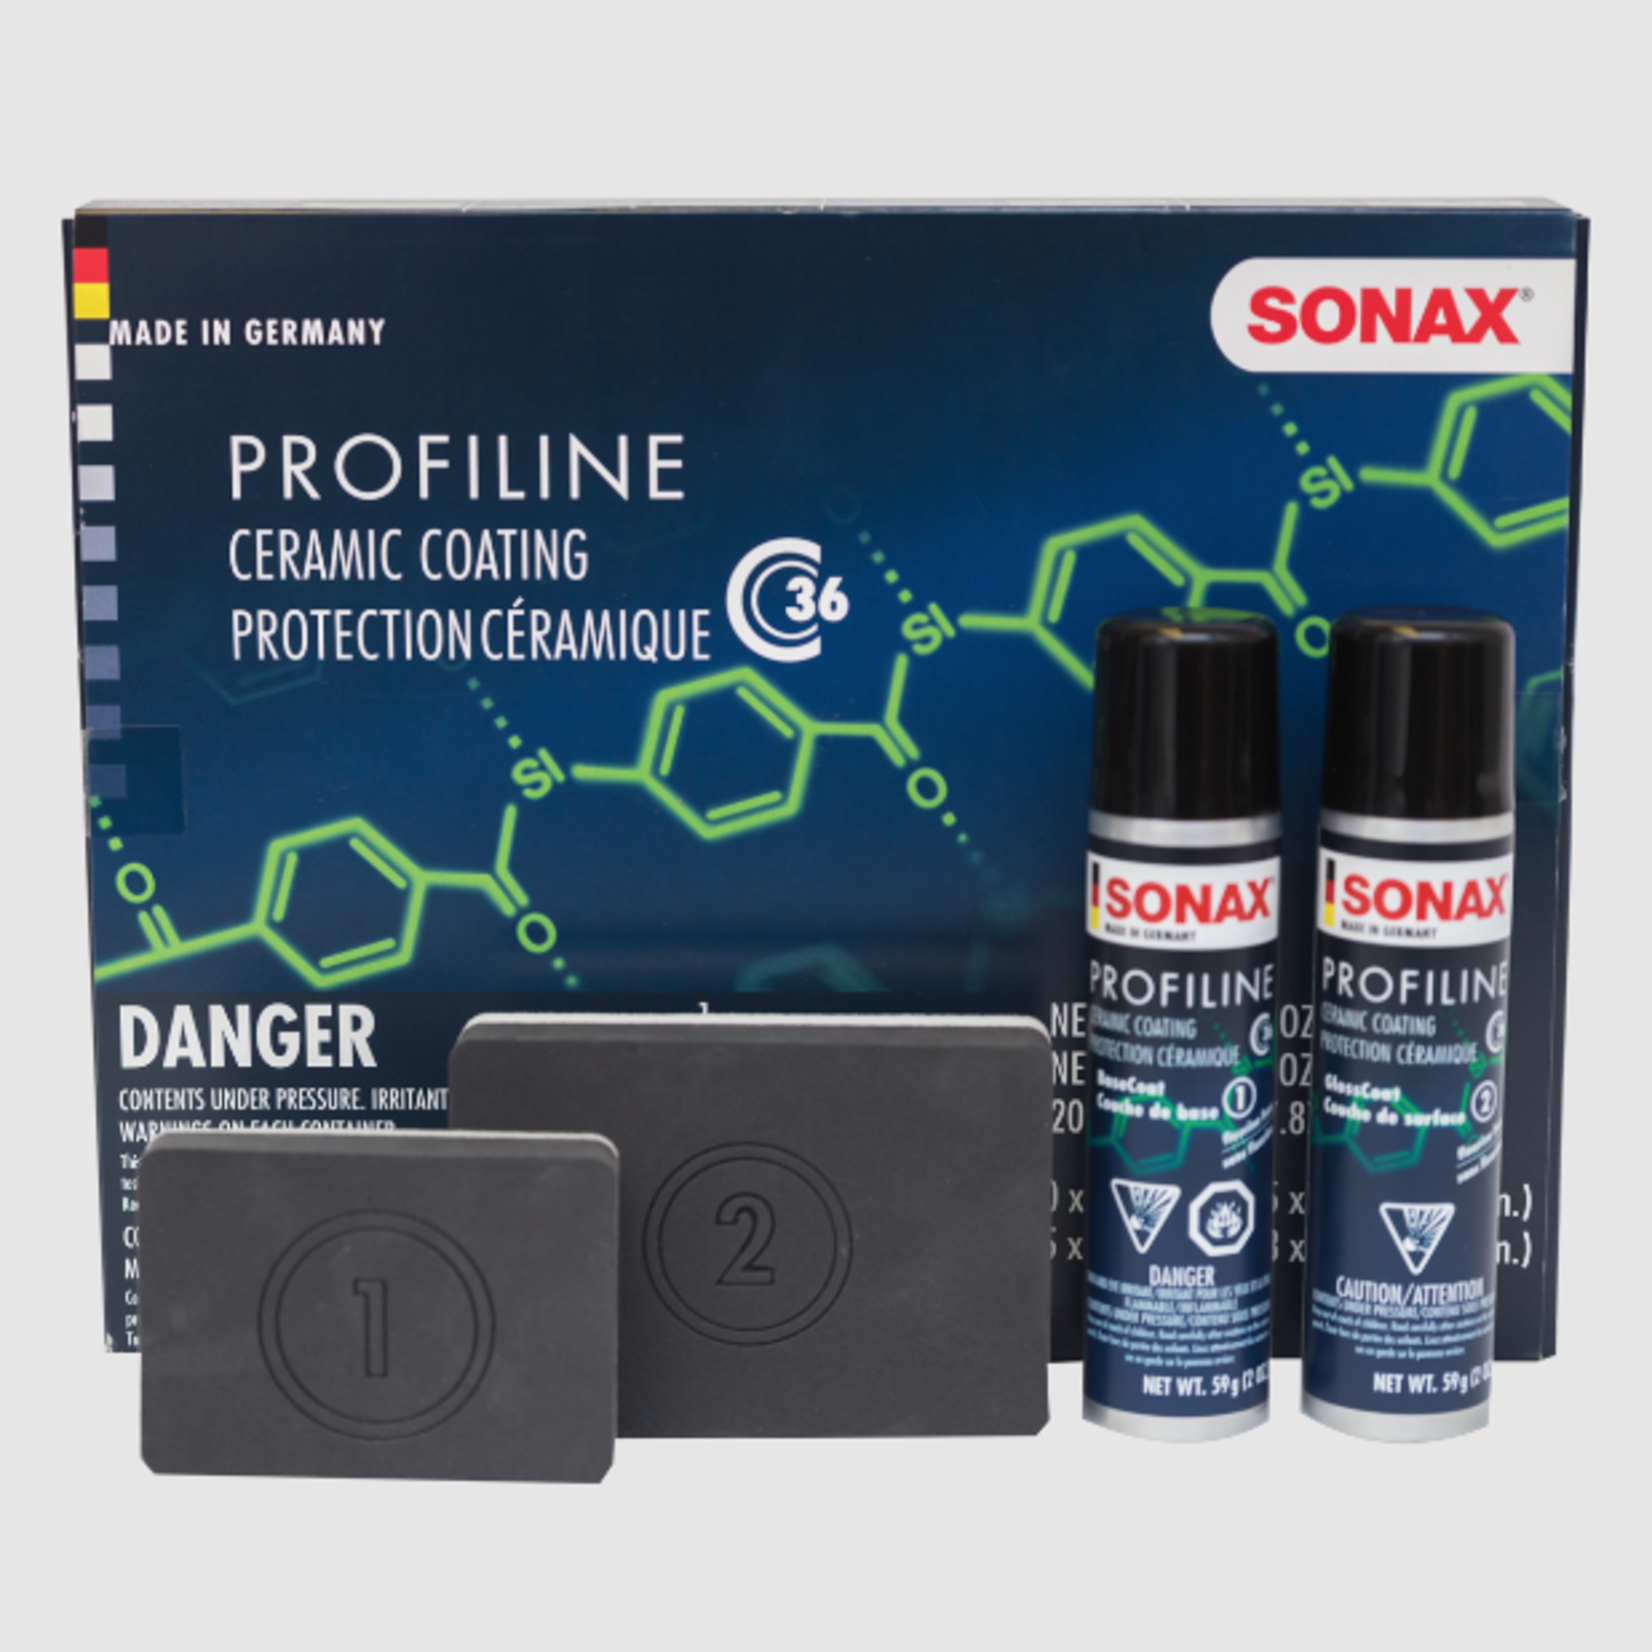 SONAX SONAX Profiline CC36 Ceramic Coating Kit